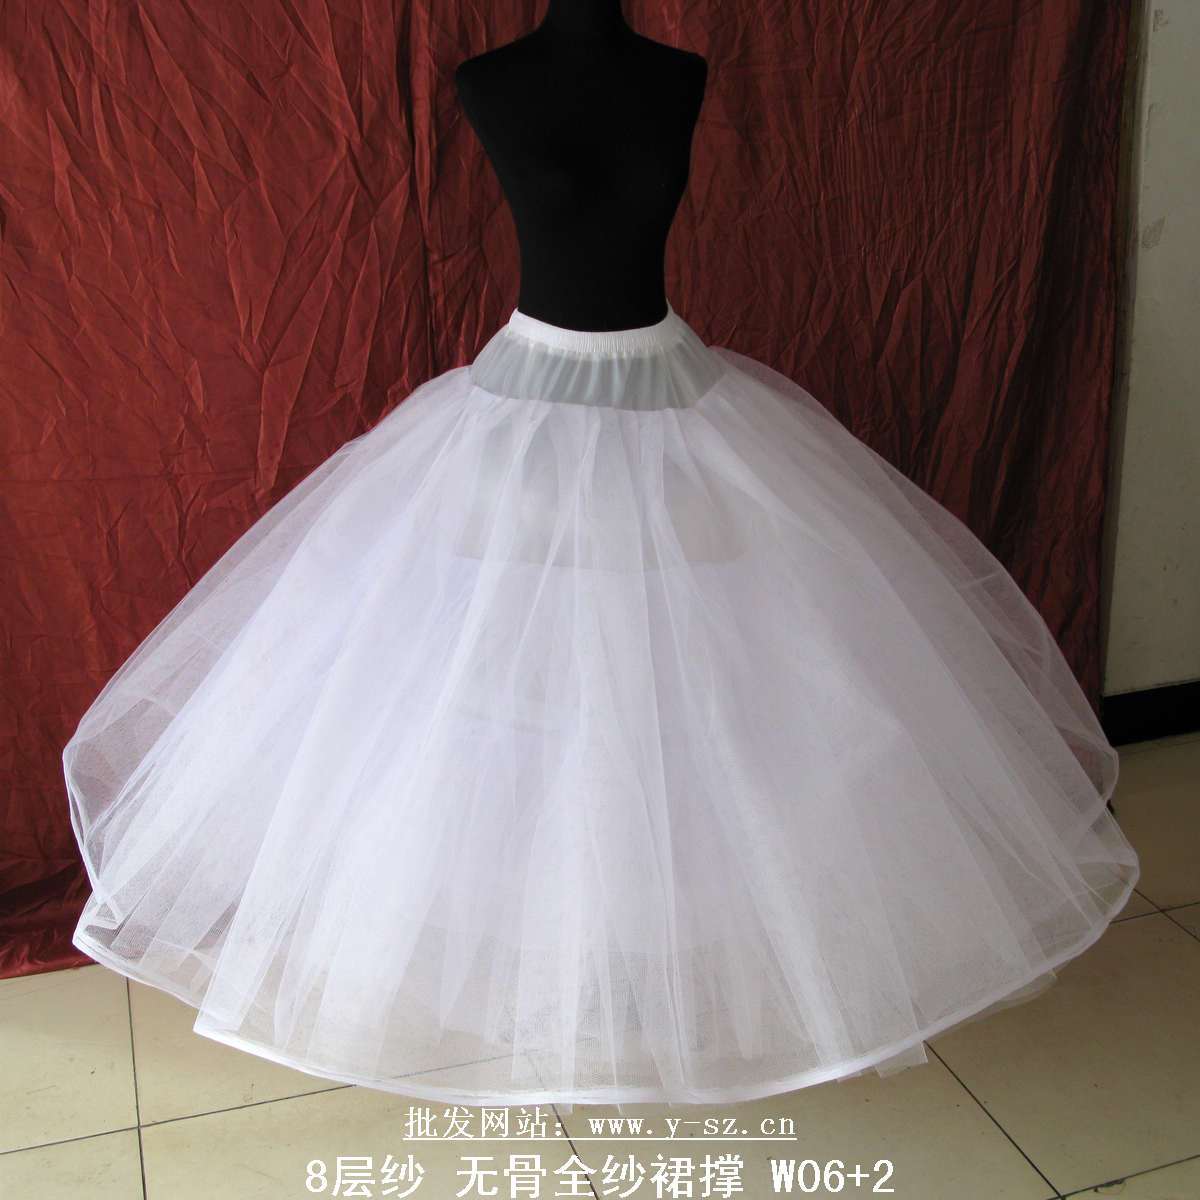 Boneless hard yarn skirt stretcher w08 bride wedding formal dress plus size skirt customize